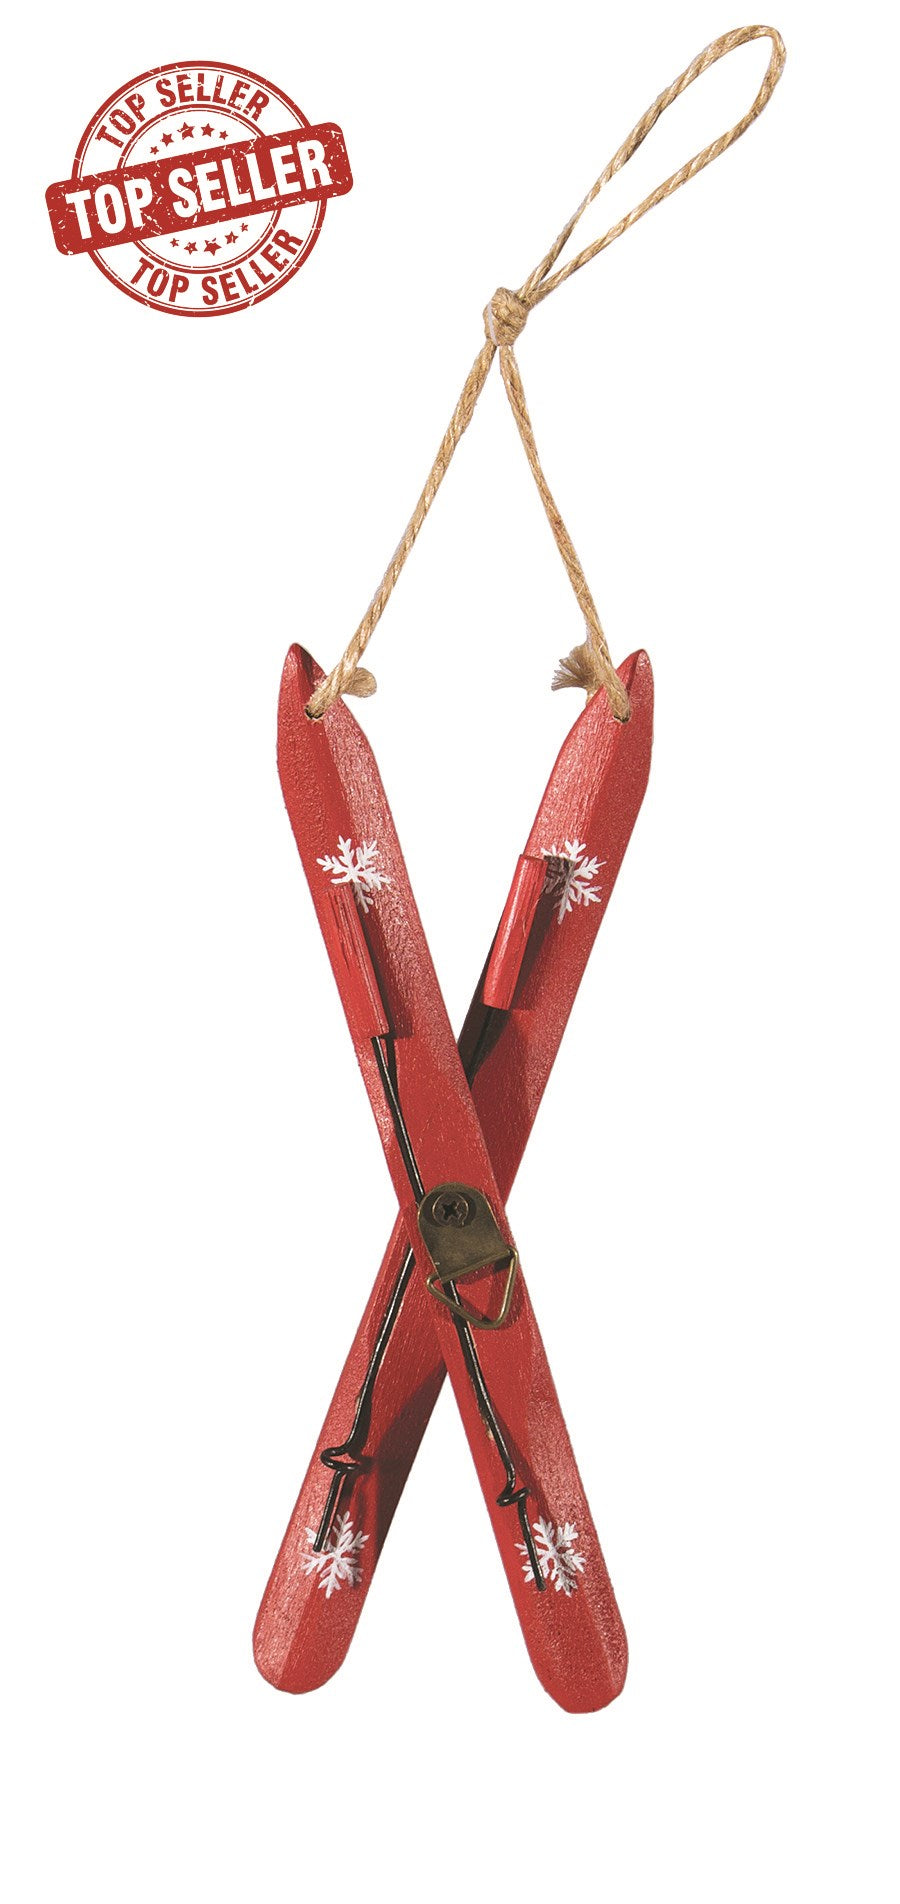 Crossed Skis Ornament